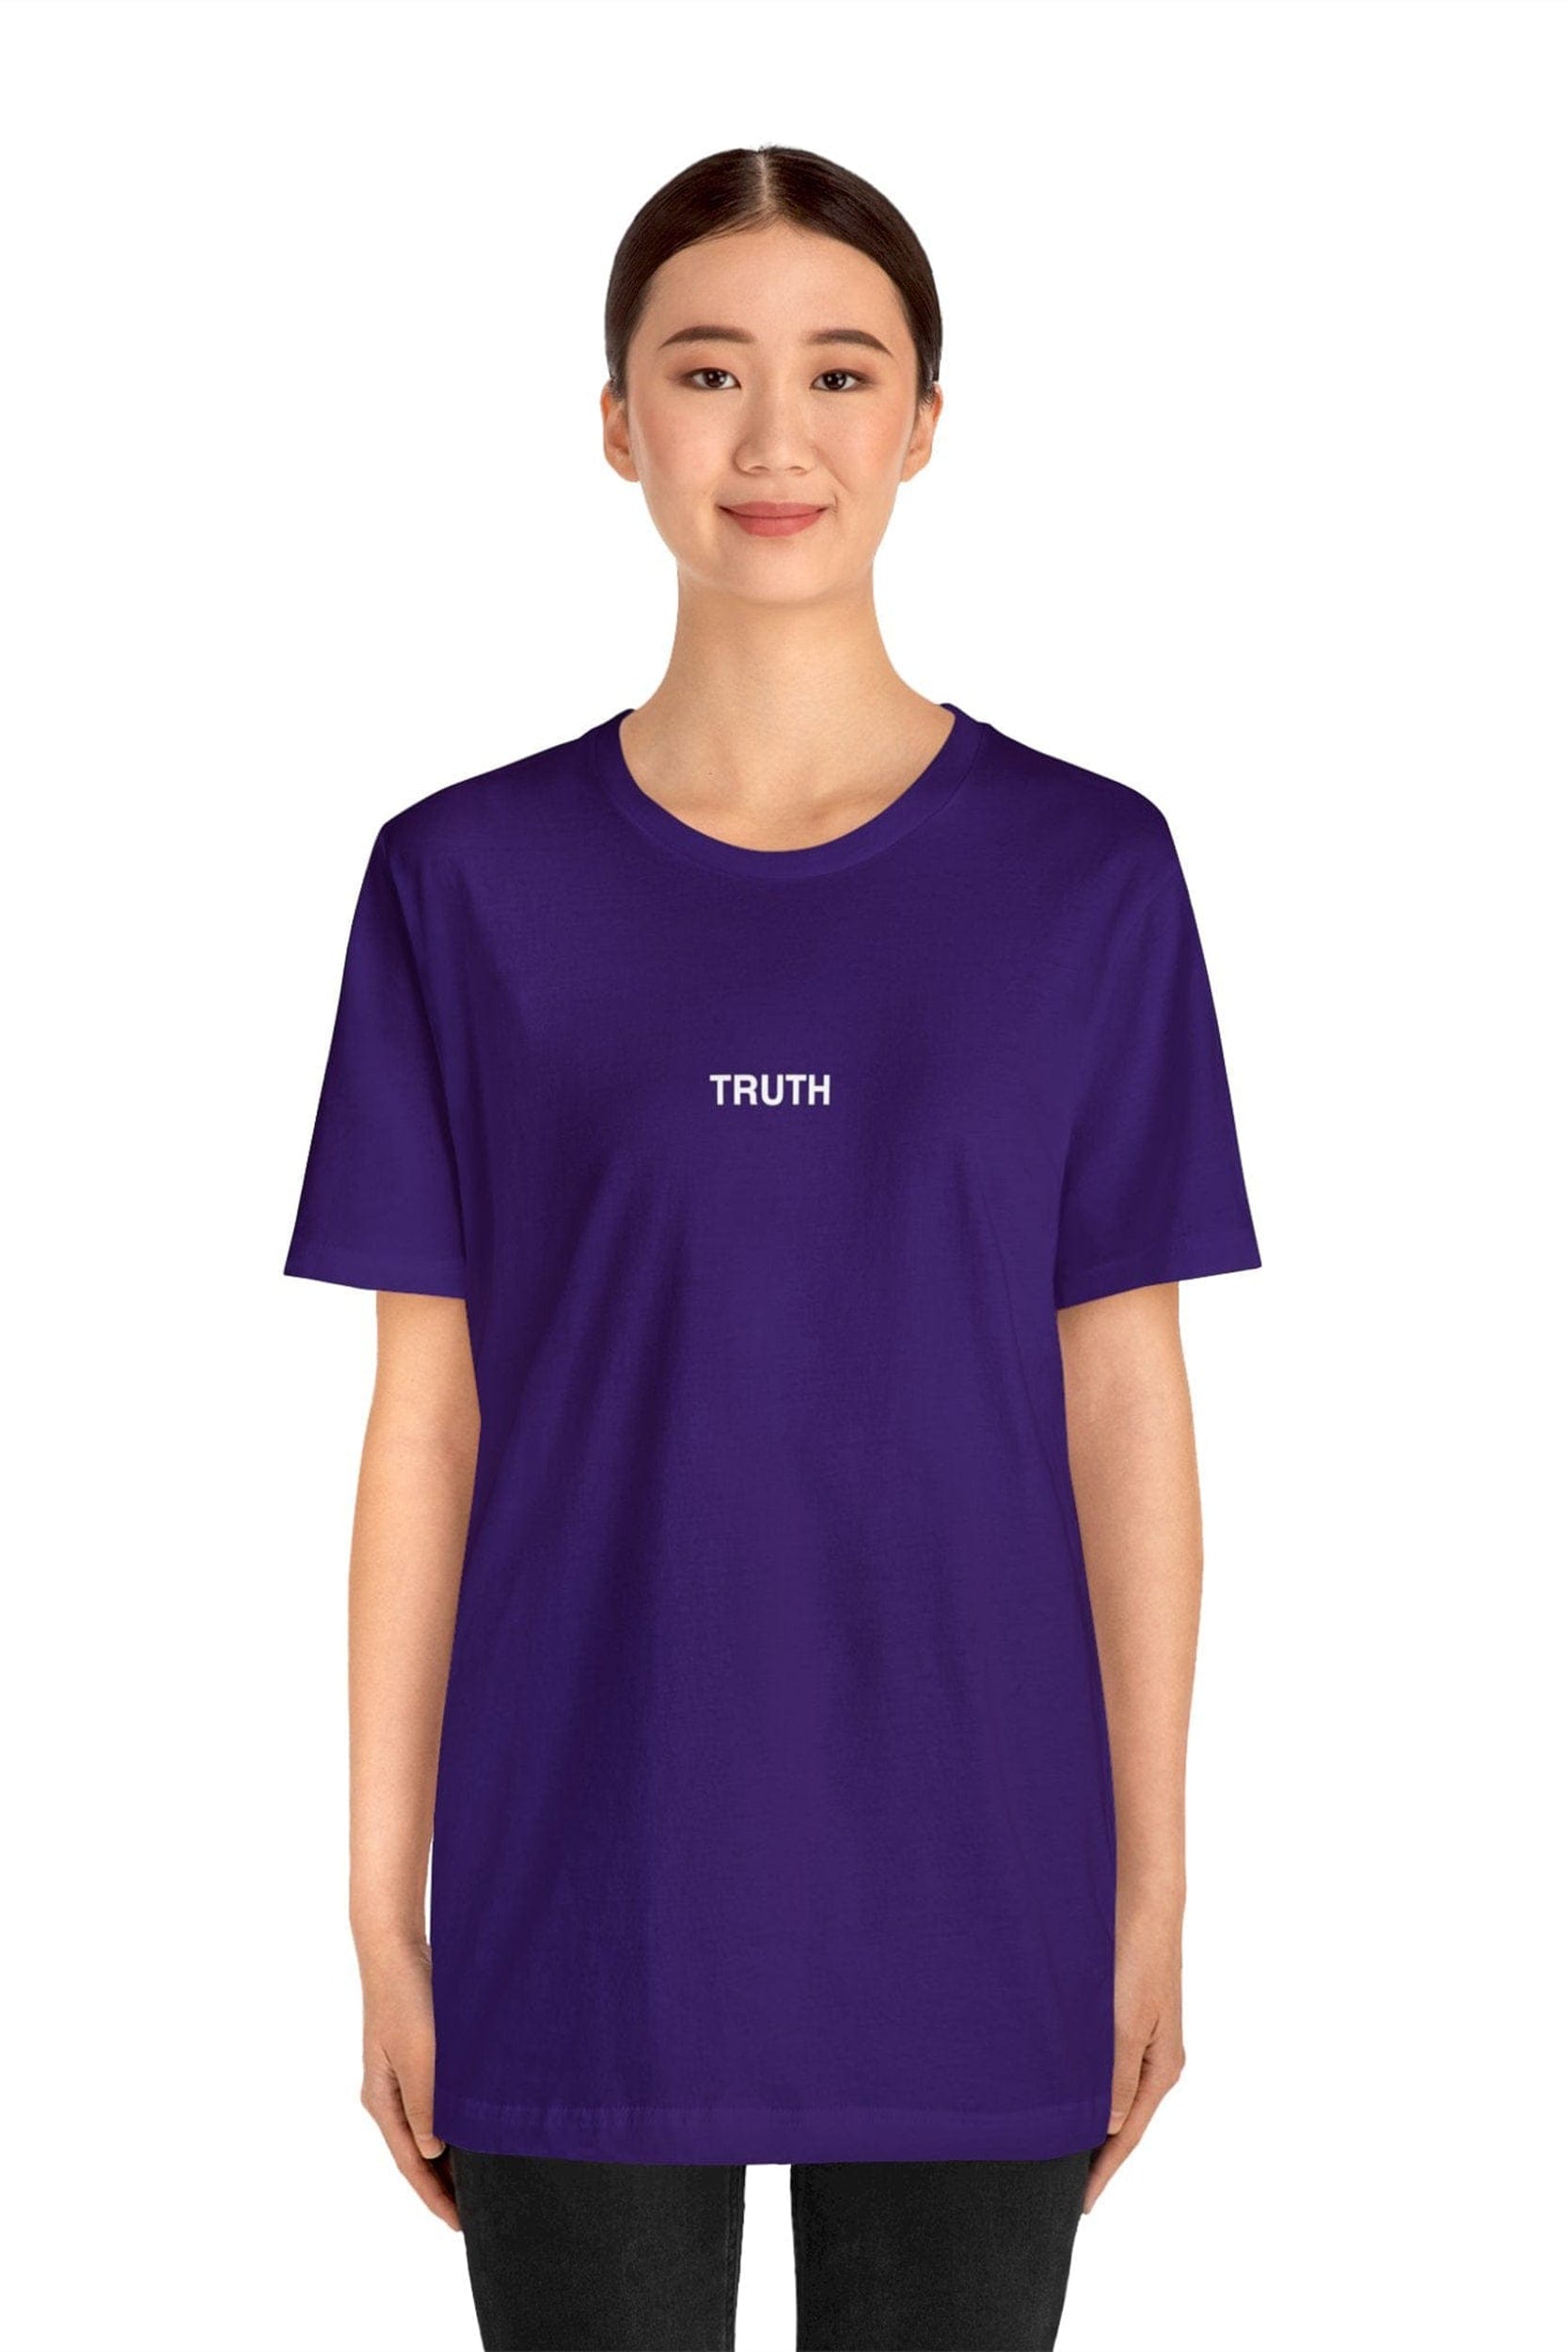 "TRUTH" T-Shirt